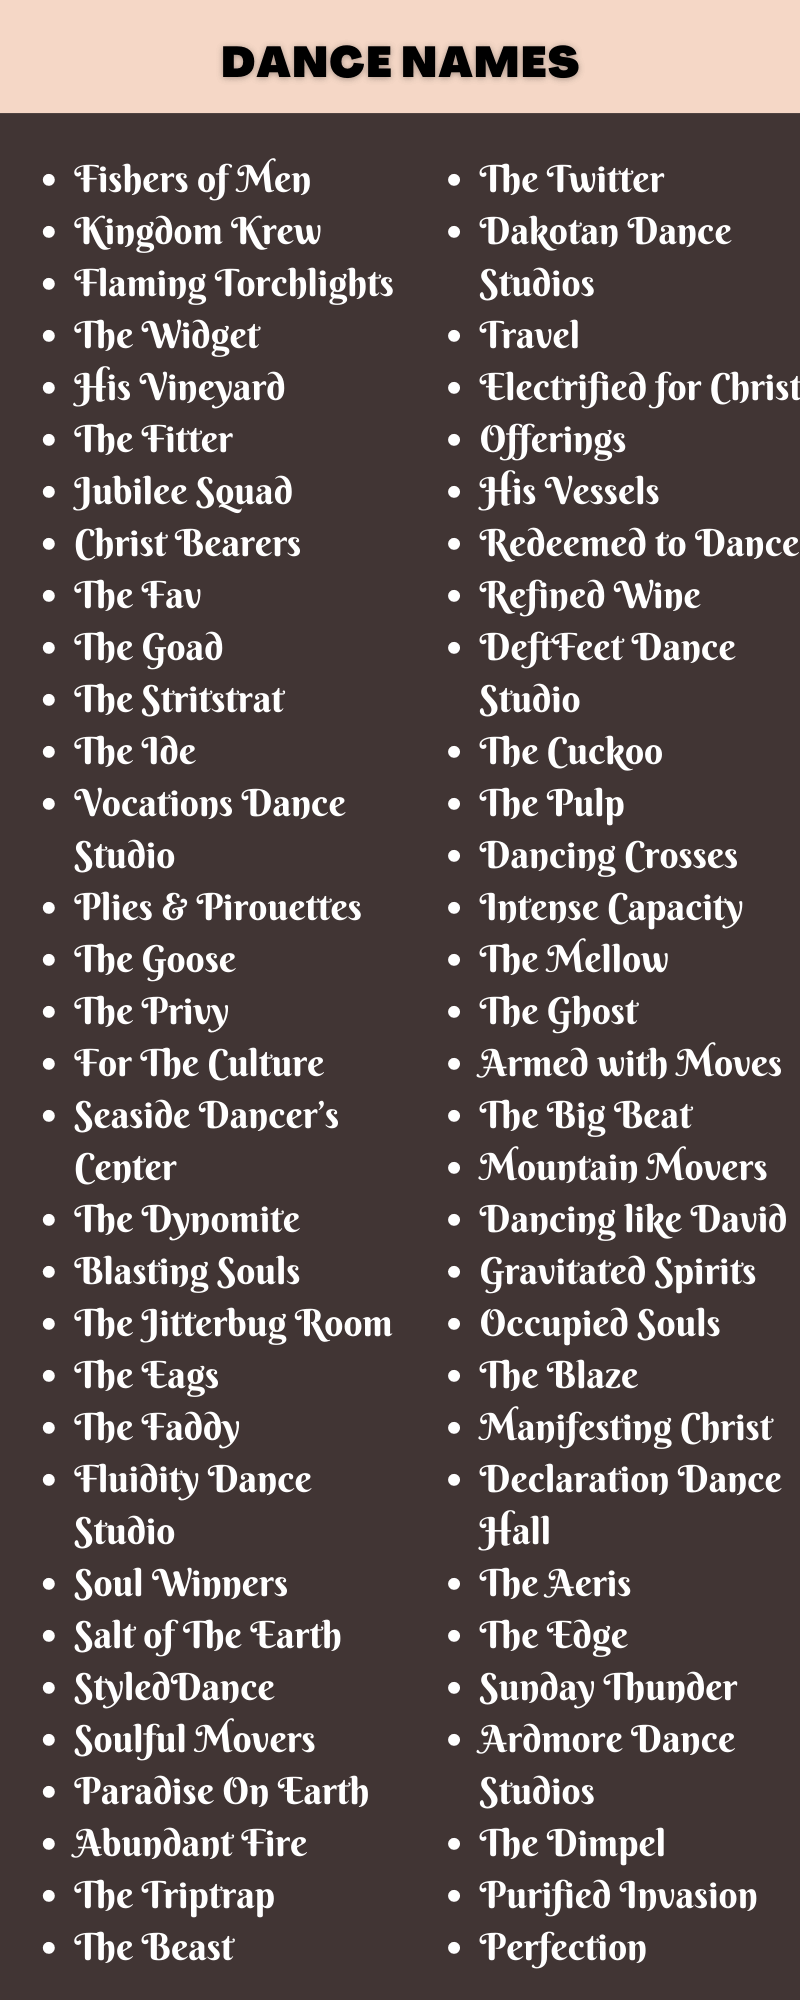 Dance Names